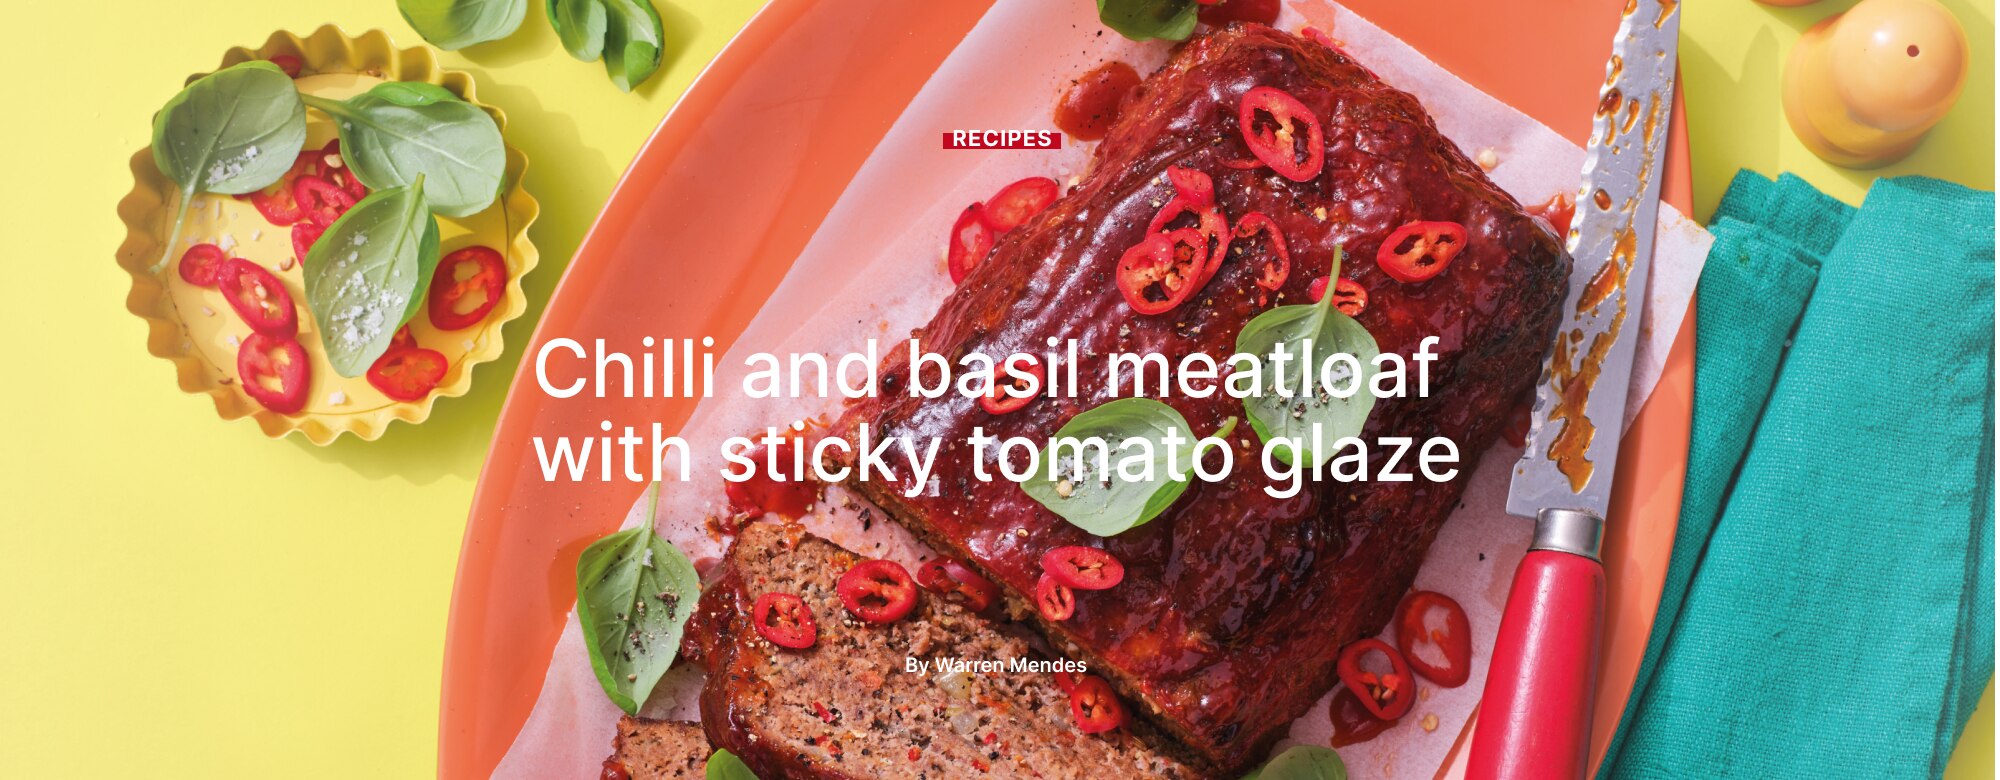 Chilli and basil meatloaf with sticky tomato glaze